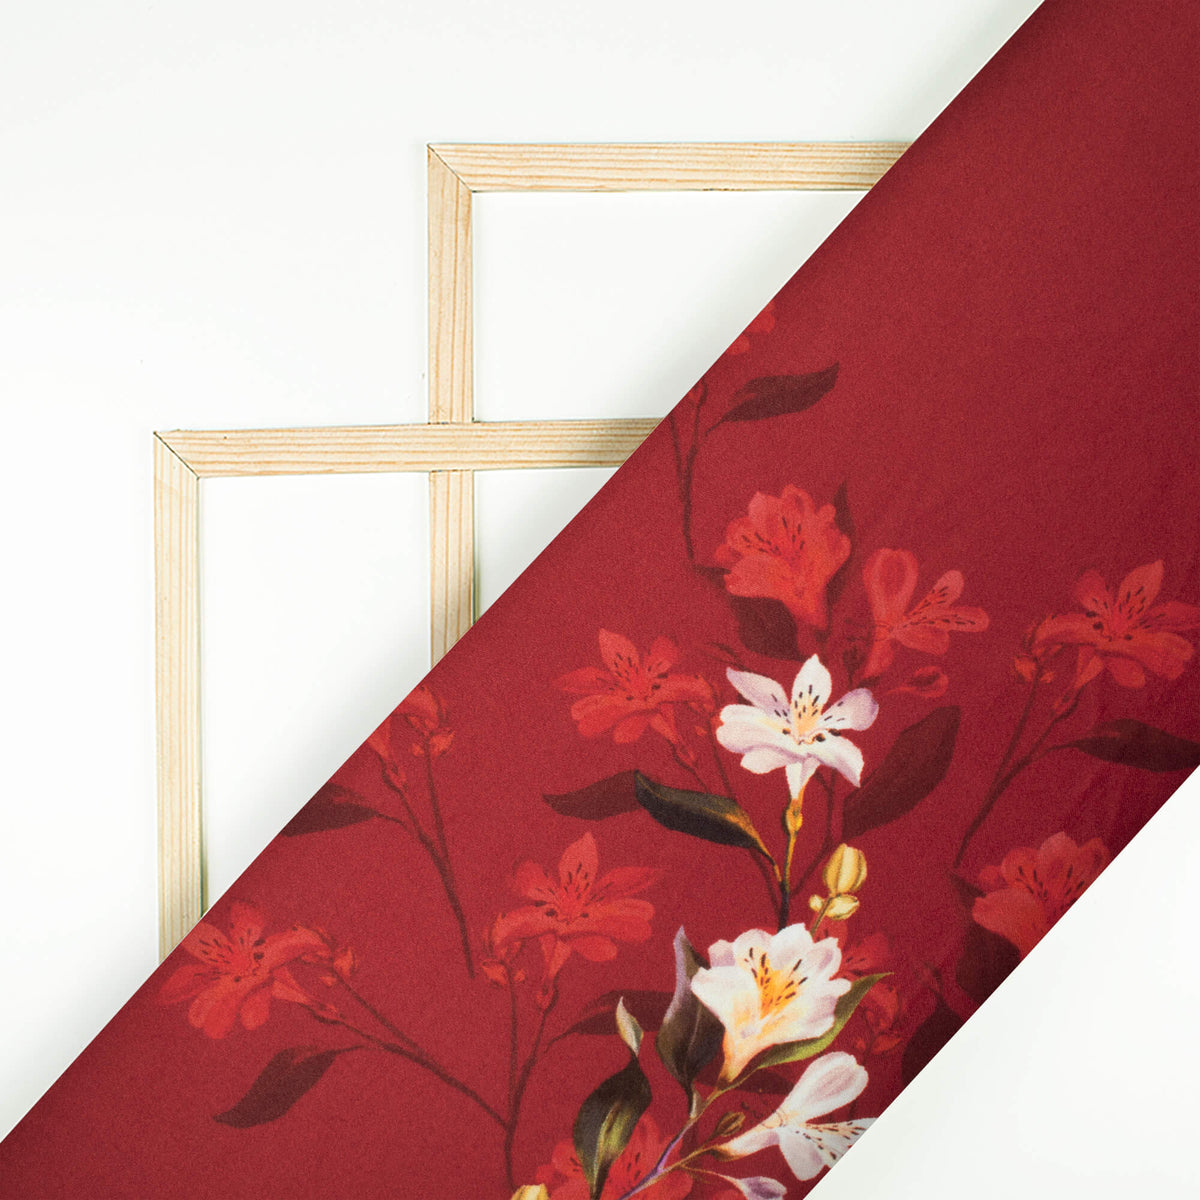 Maroon And White Floral Pattern Digital Print Premium Lush Satin Fabric